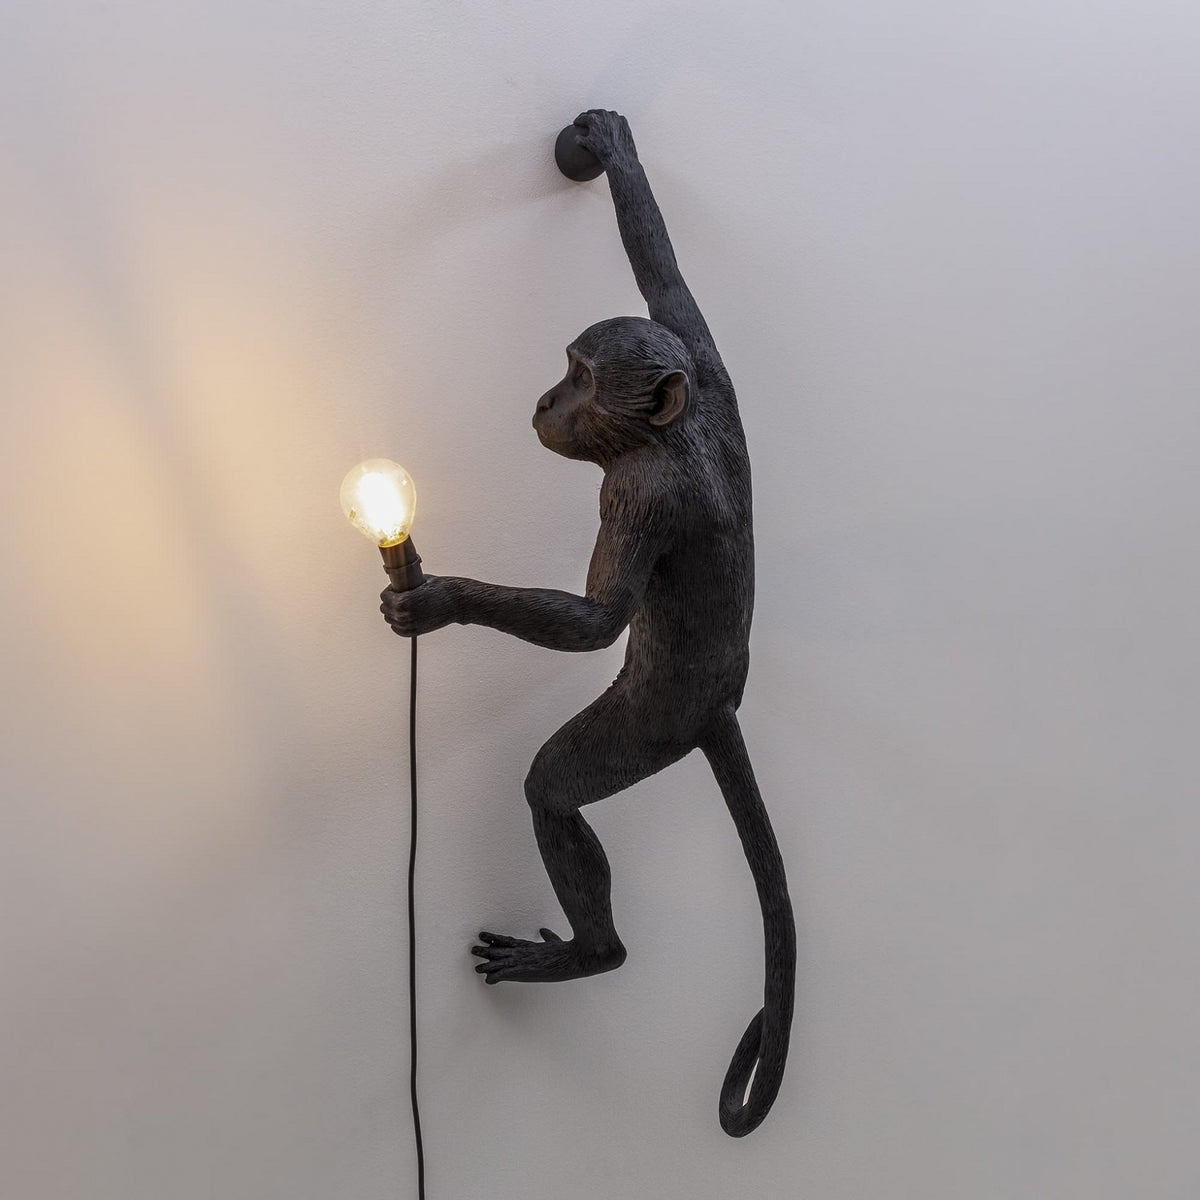 Climbing Monkey Light Right - Seletti